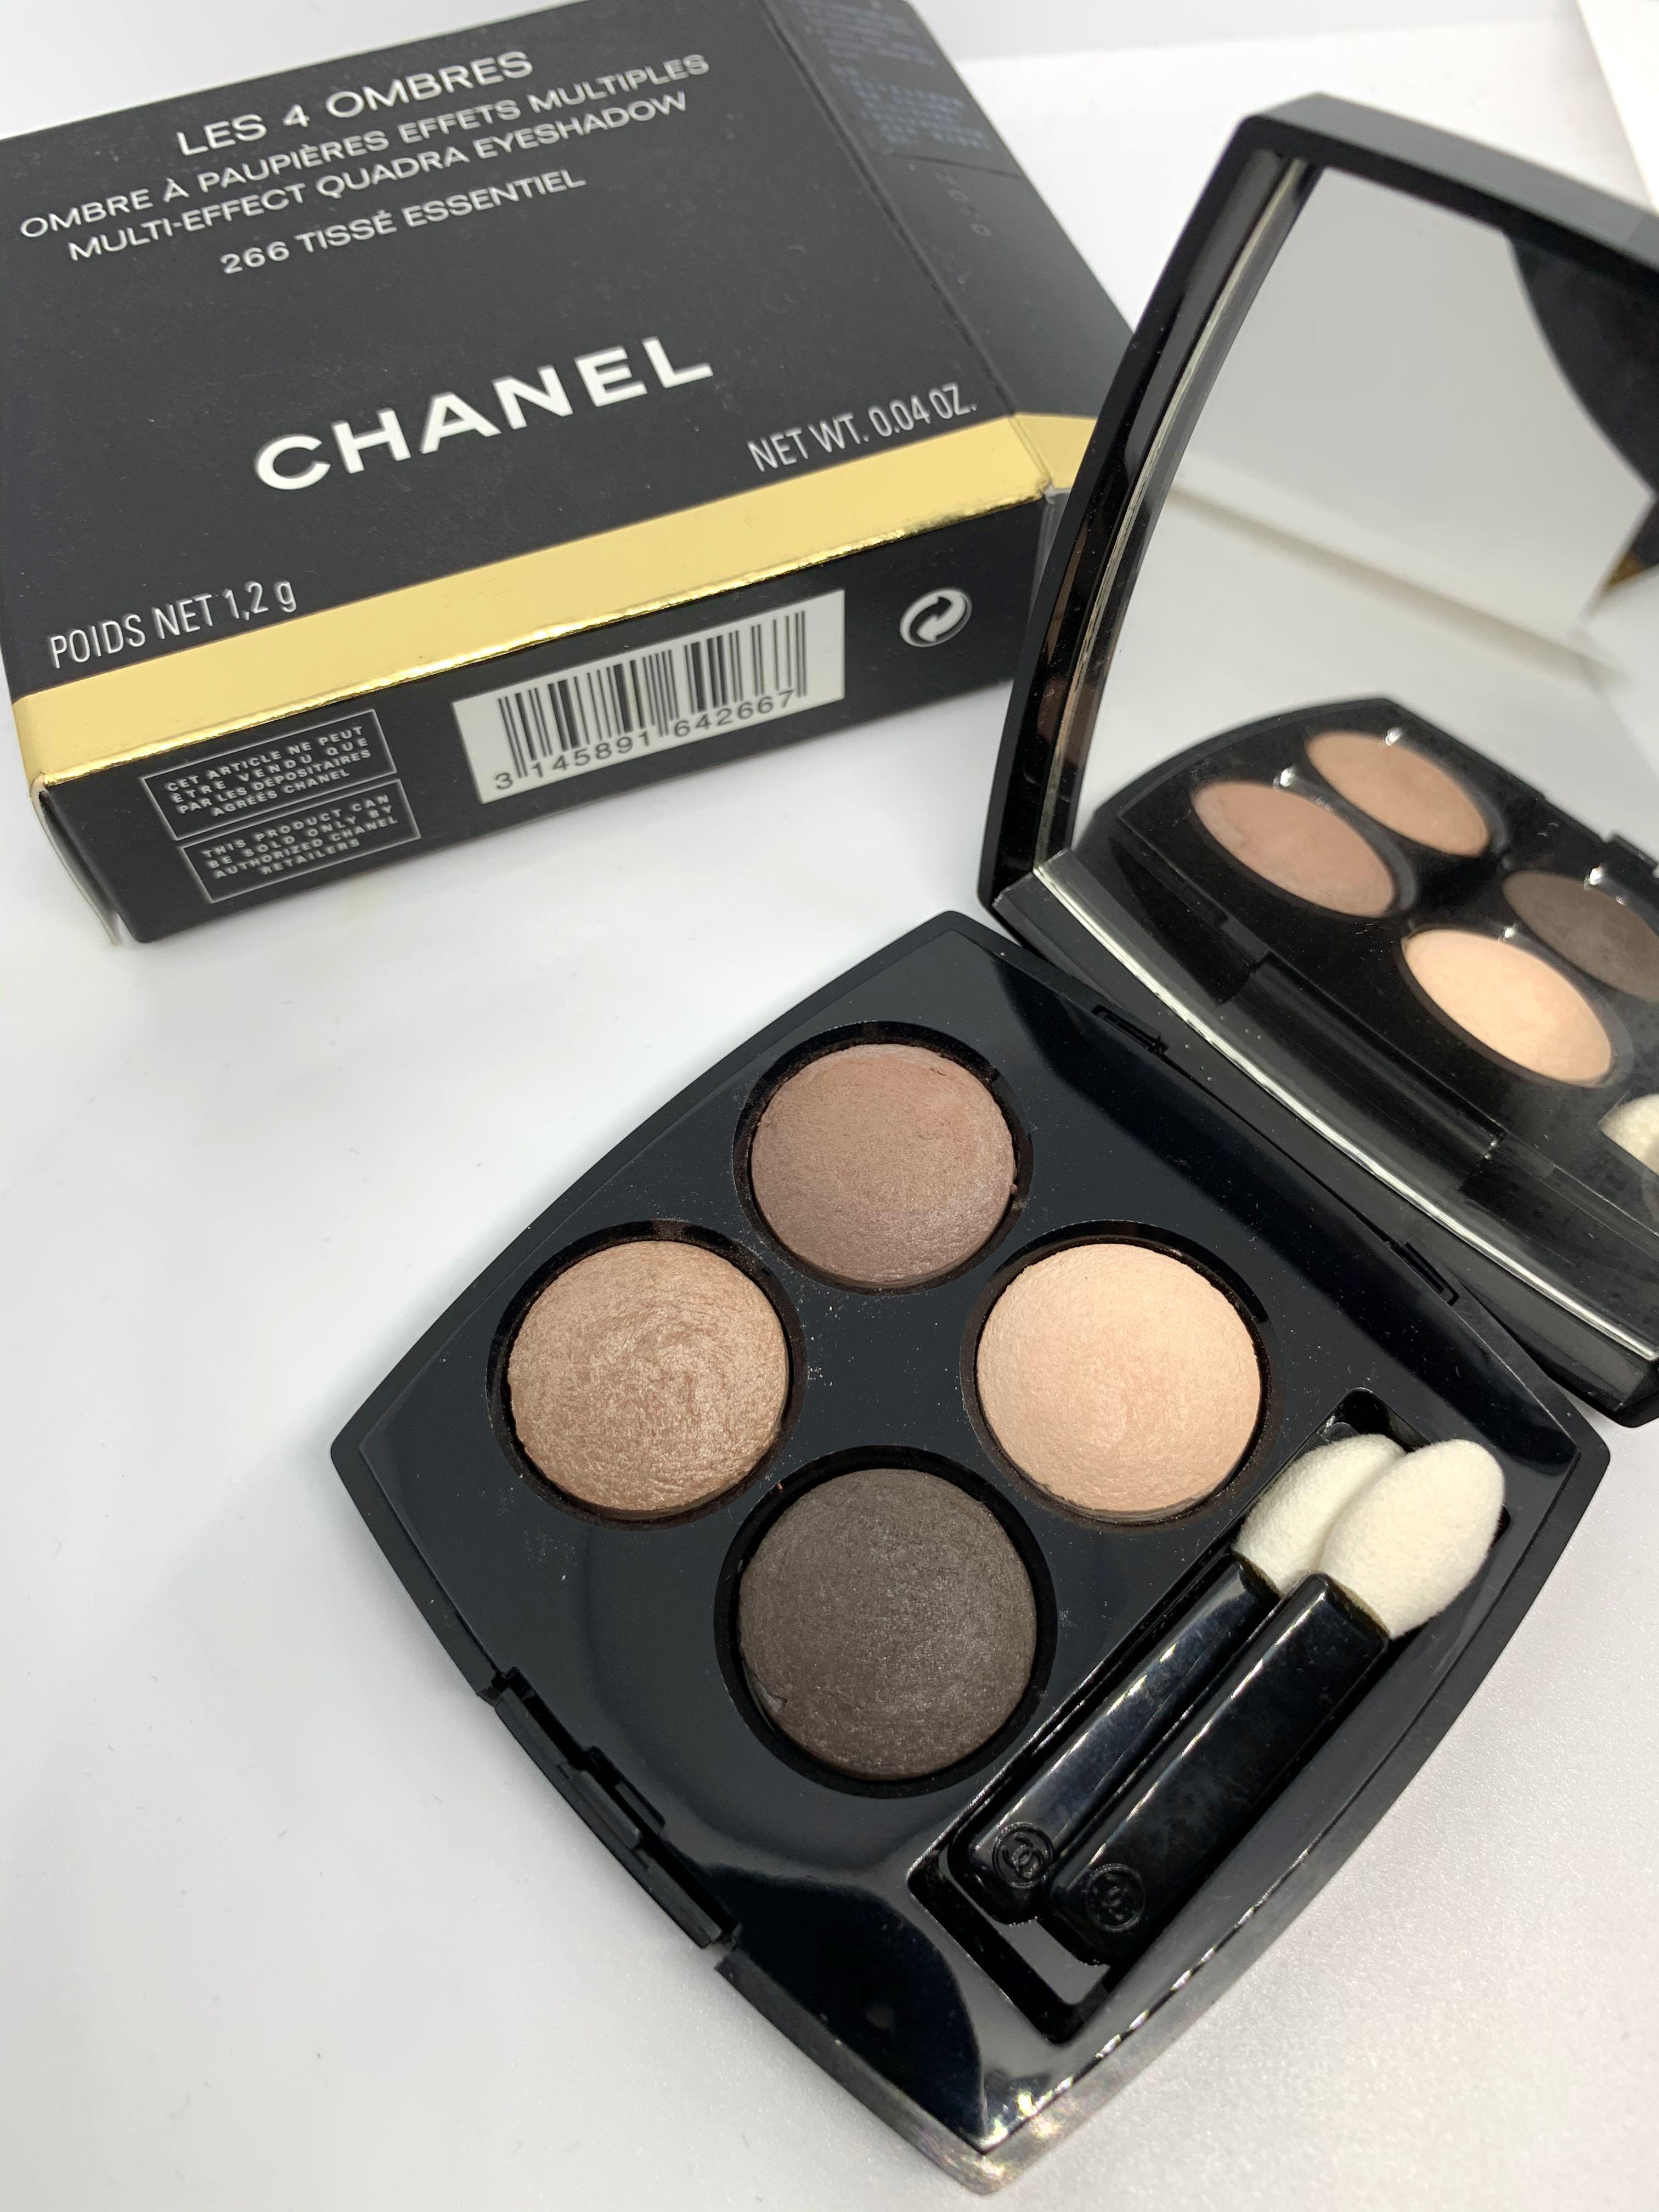 The Beauty Alchemist: Ombres Lamees De Chanel Eyeshadow Palette